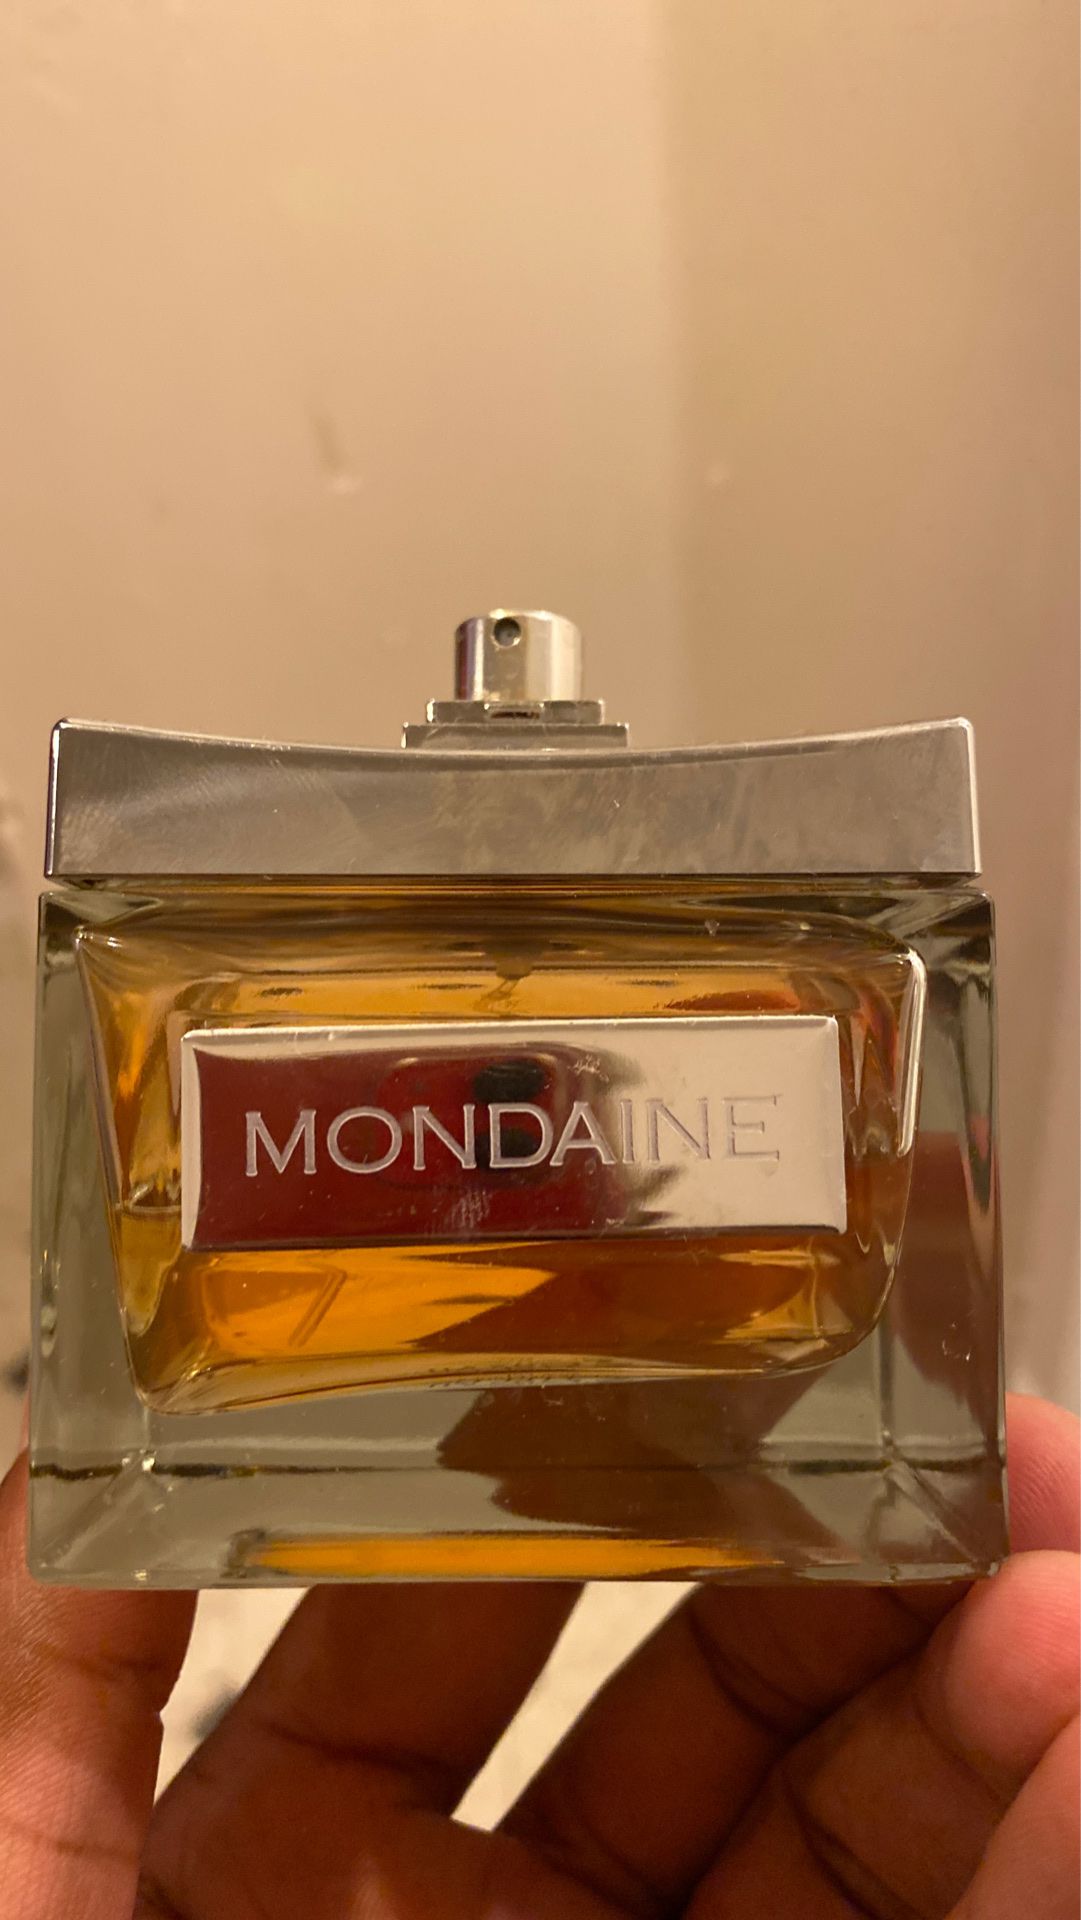 Mondaine Woman’s Perfume